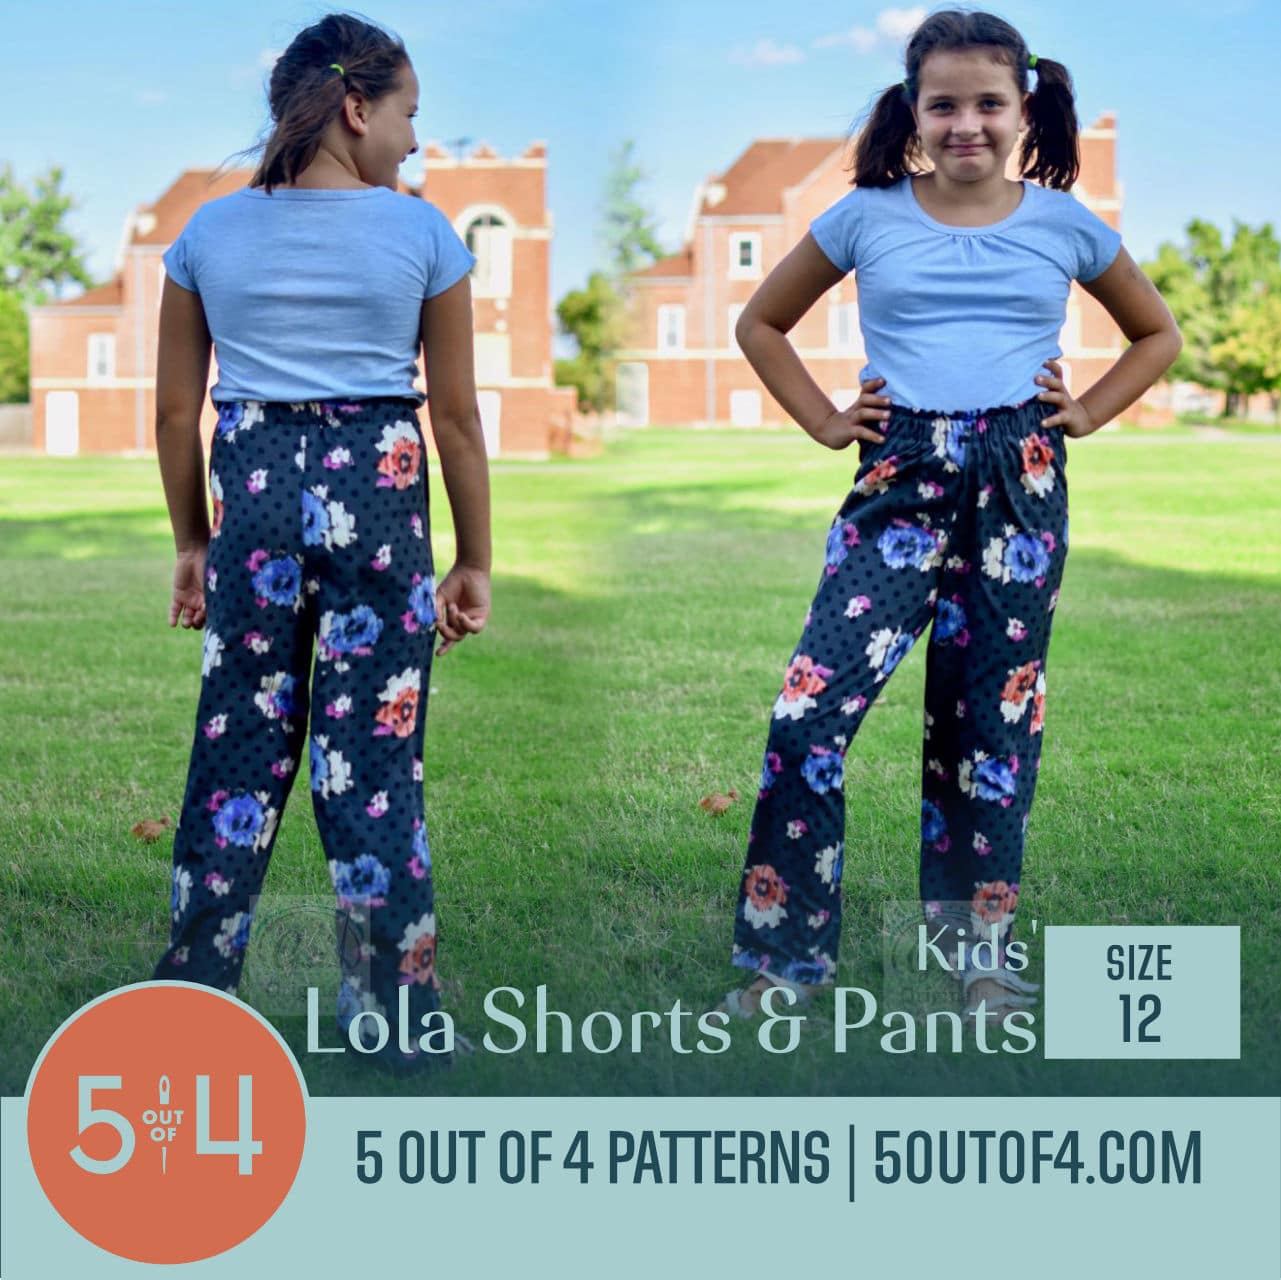 Lola Pants, Capris & Shorts - 5 out of 4 Patterns